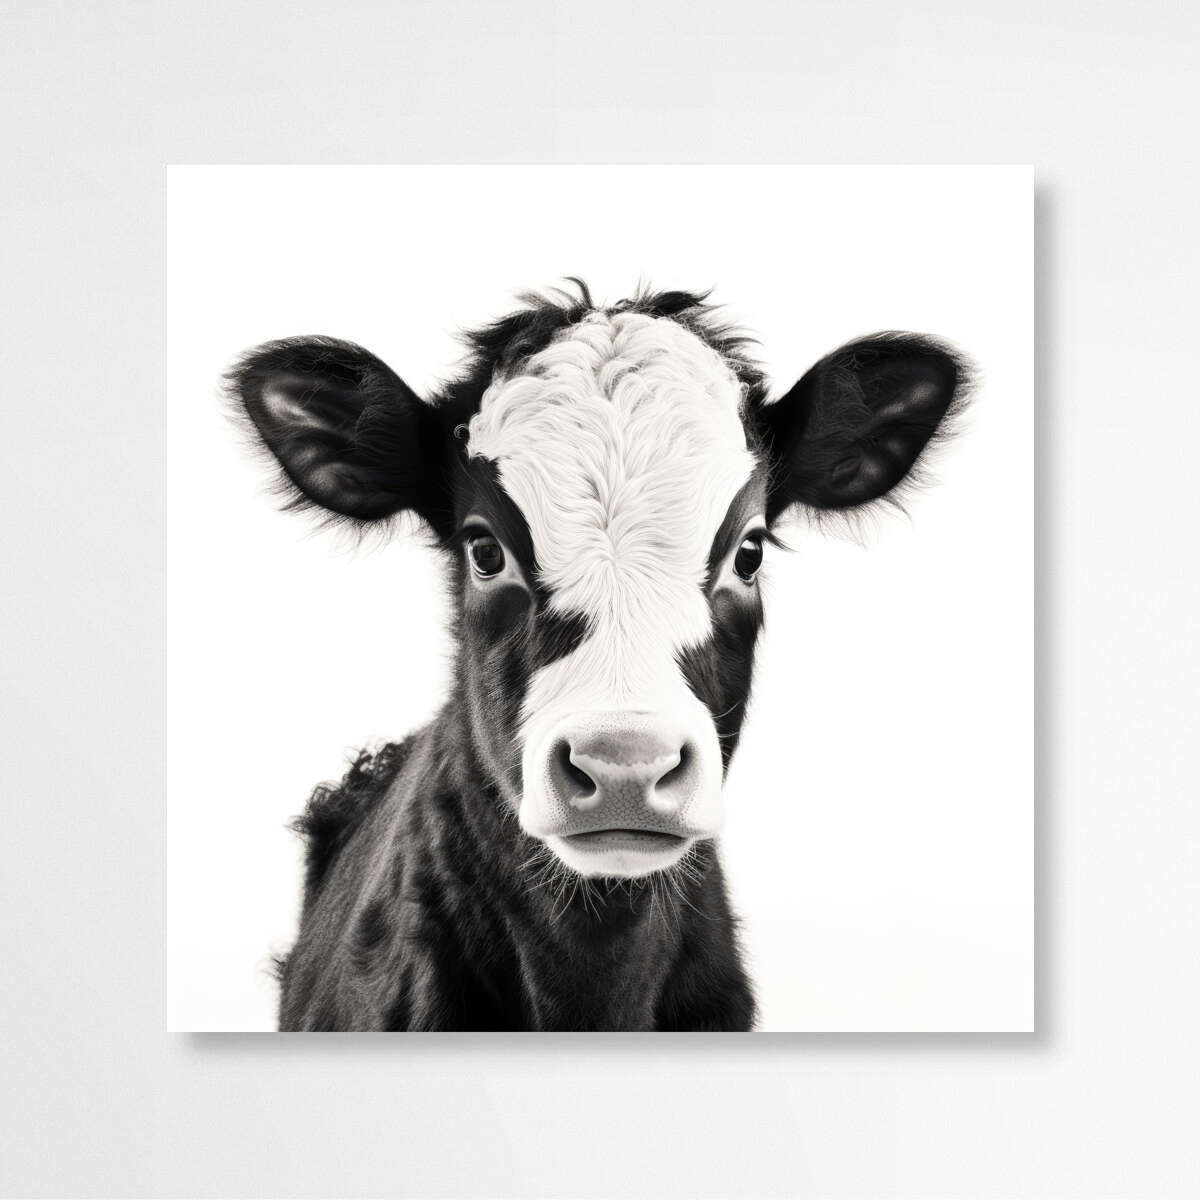 Farm Baby Animal Cow Black & White | Nursery Wall Art Prints - The Canvas Hive